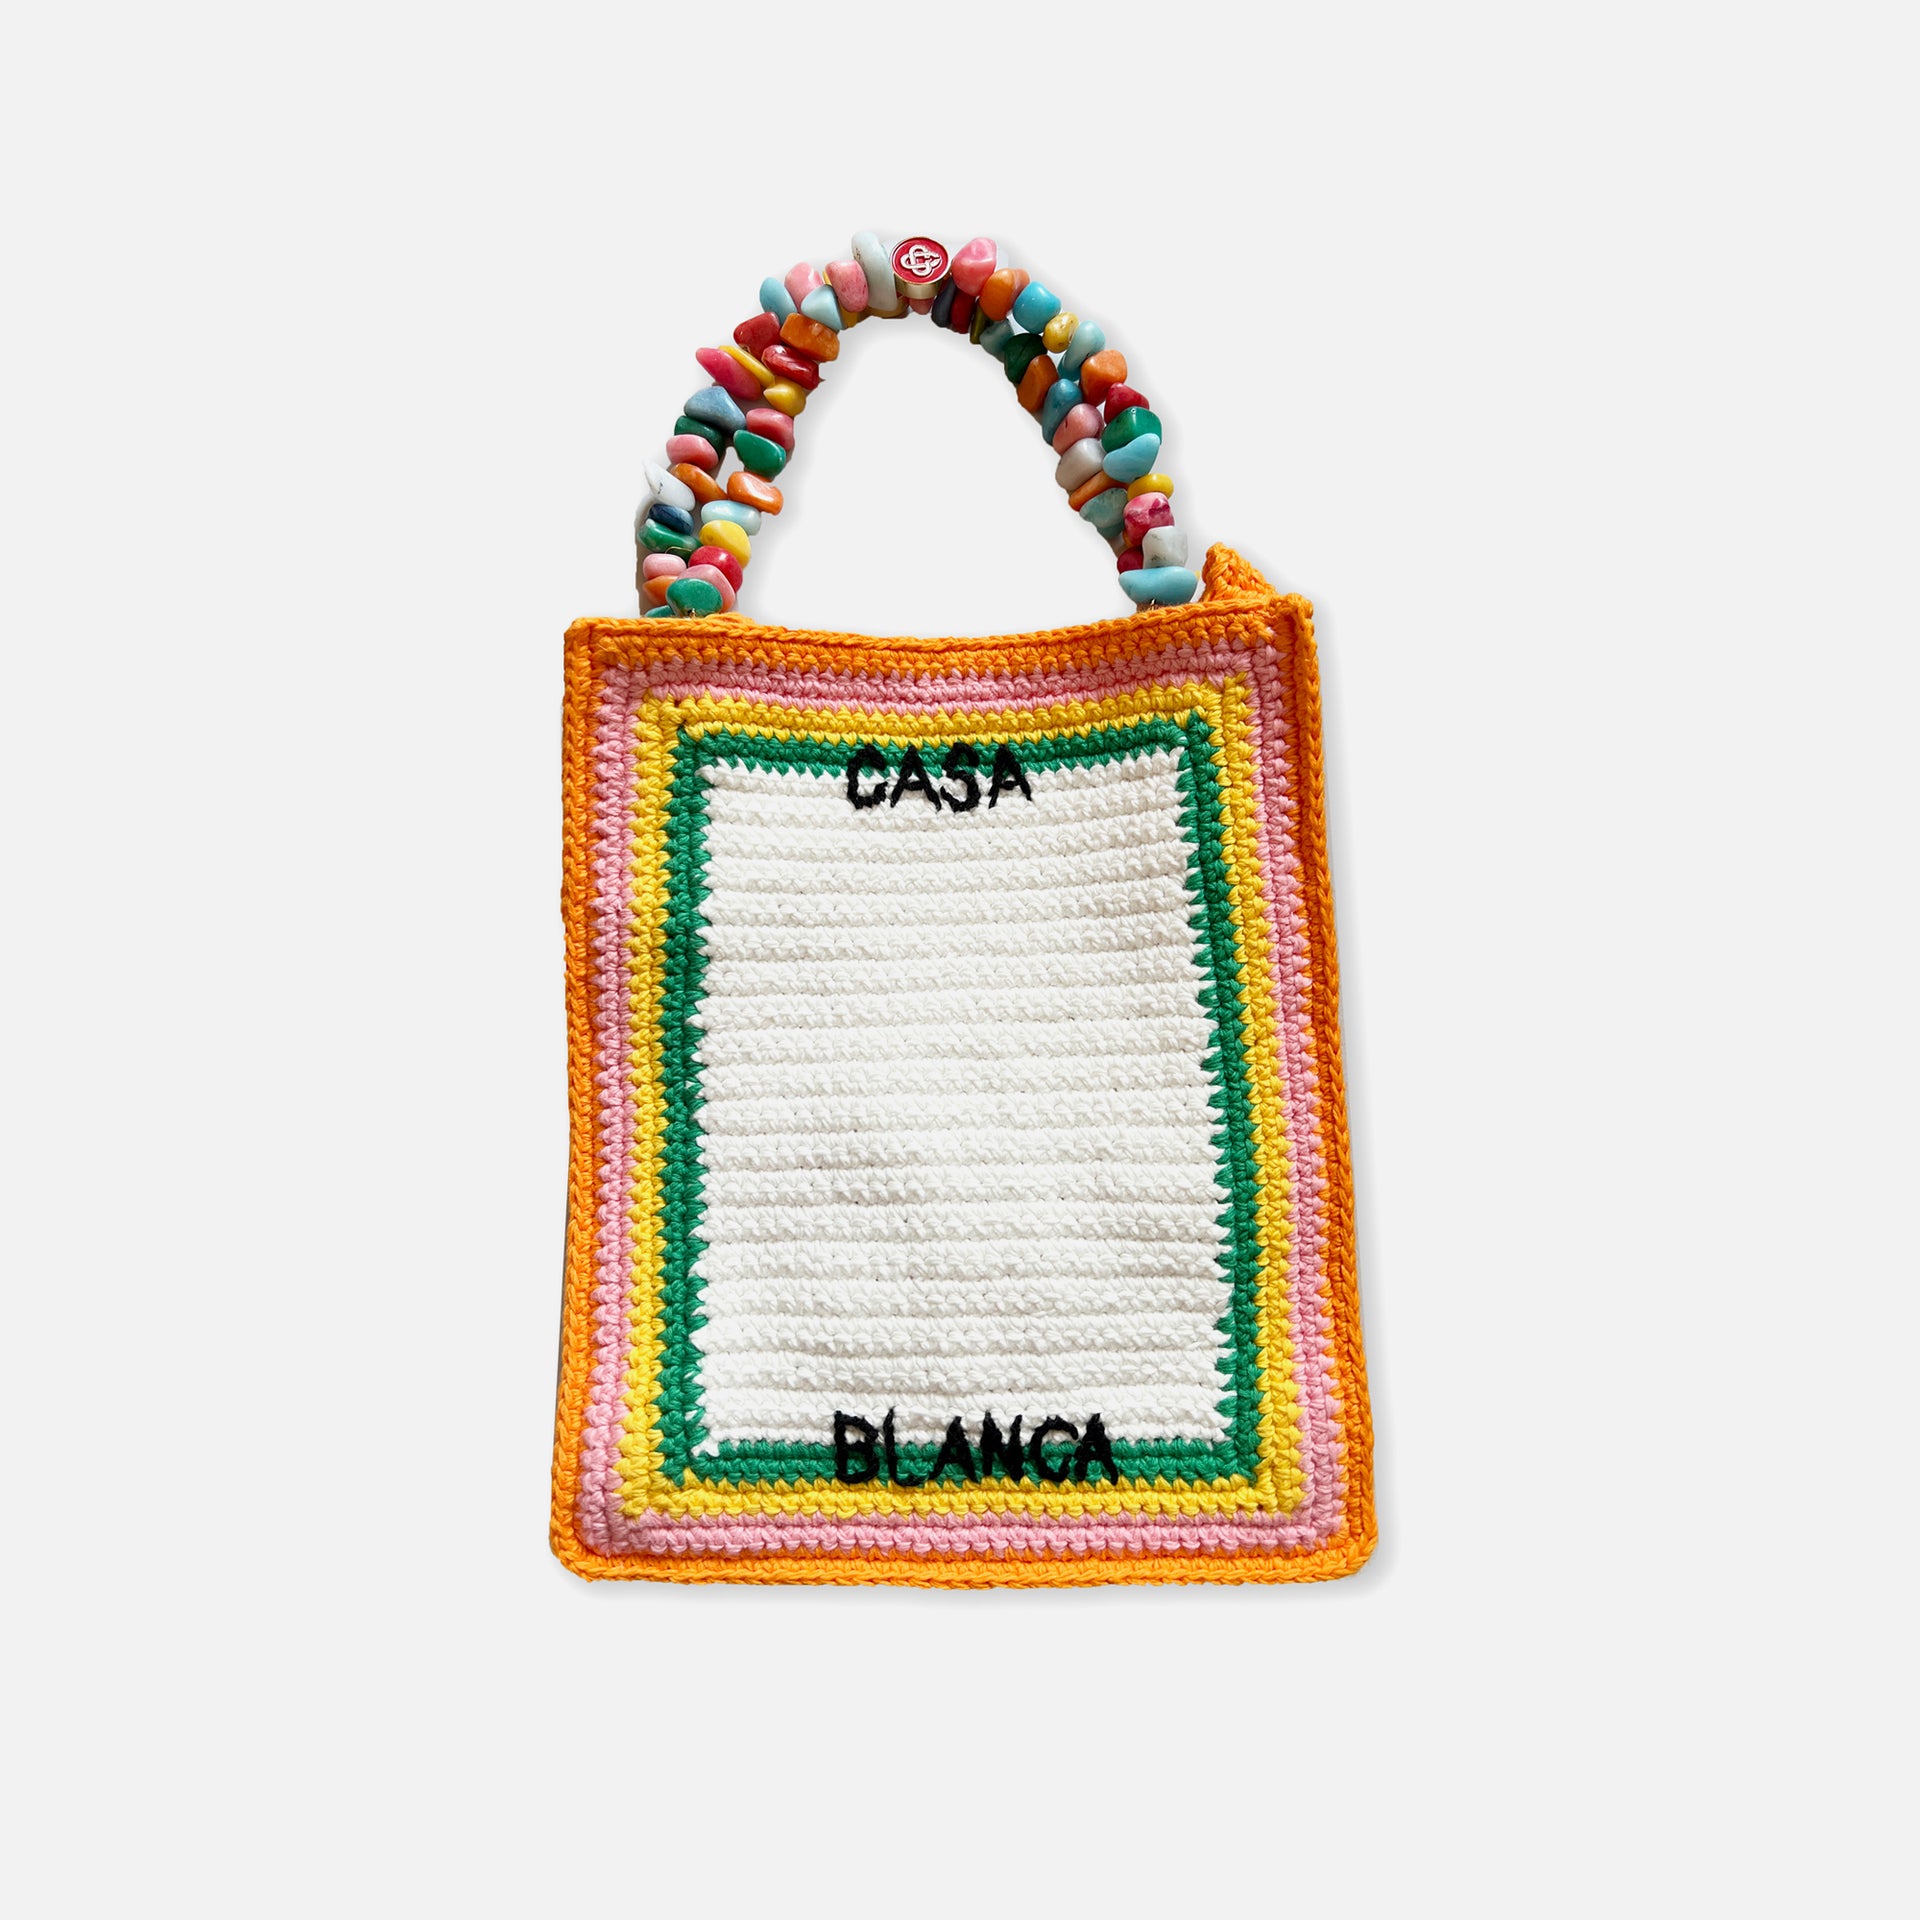 Casablanca Pebble Handle LARGE Crochet Bag - Gradient